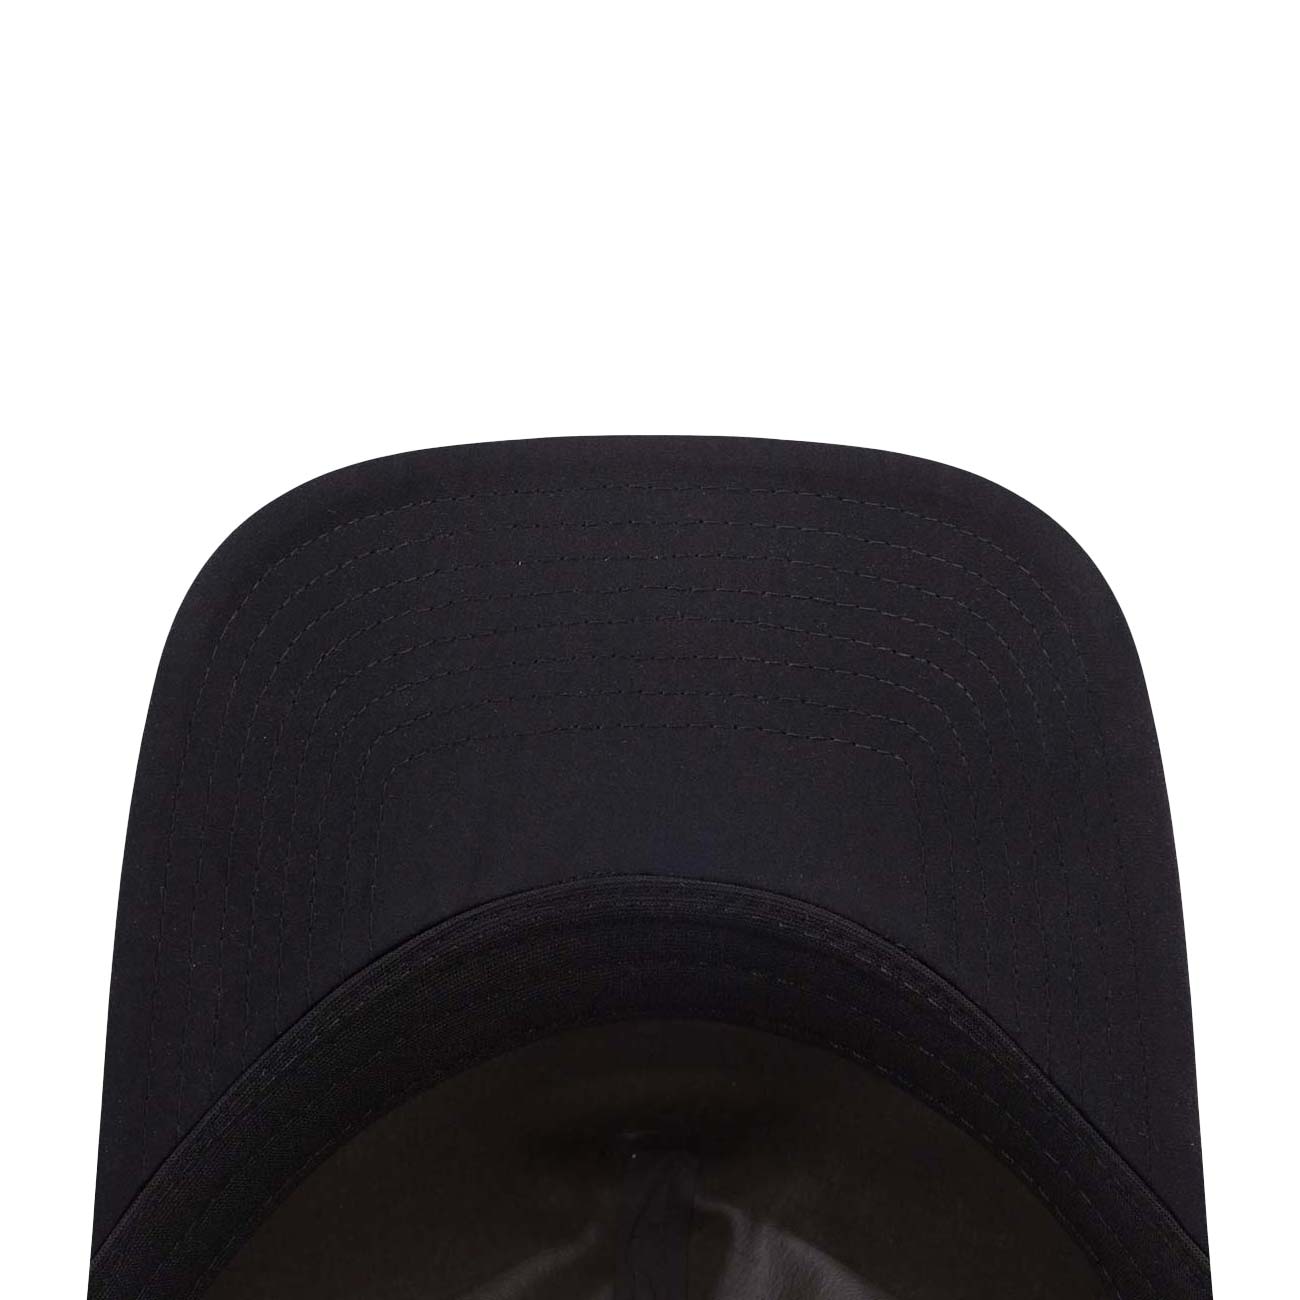 NoName hat and cap Black Single discount 92% WOMEN FASHION Accessories Hat and cap Black 